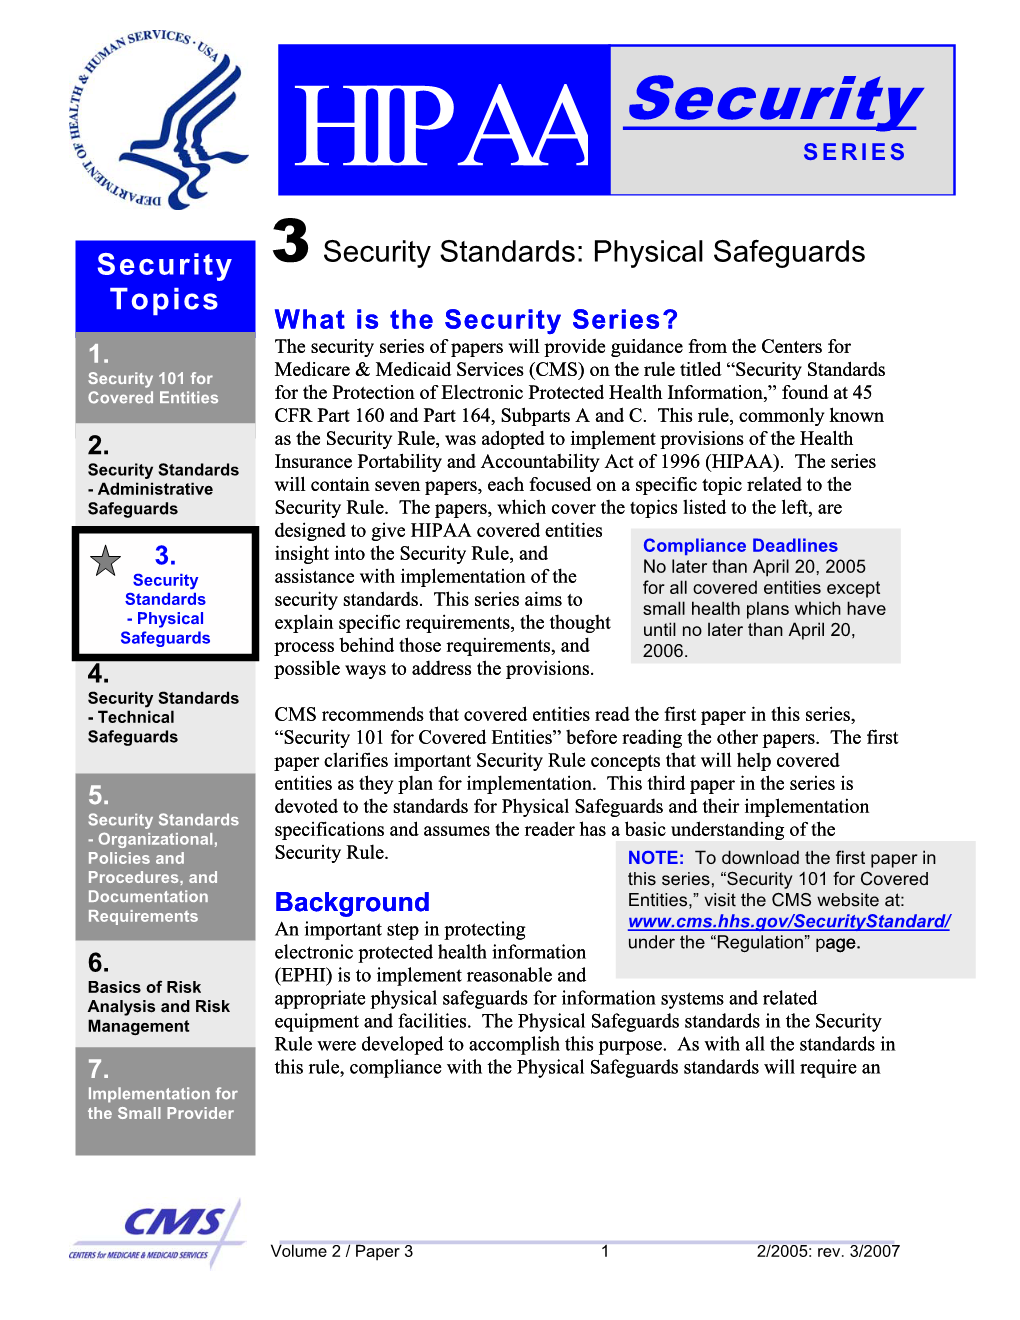 HIPAA Security Standards: Physical Safeguards